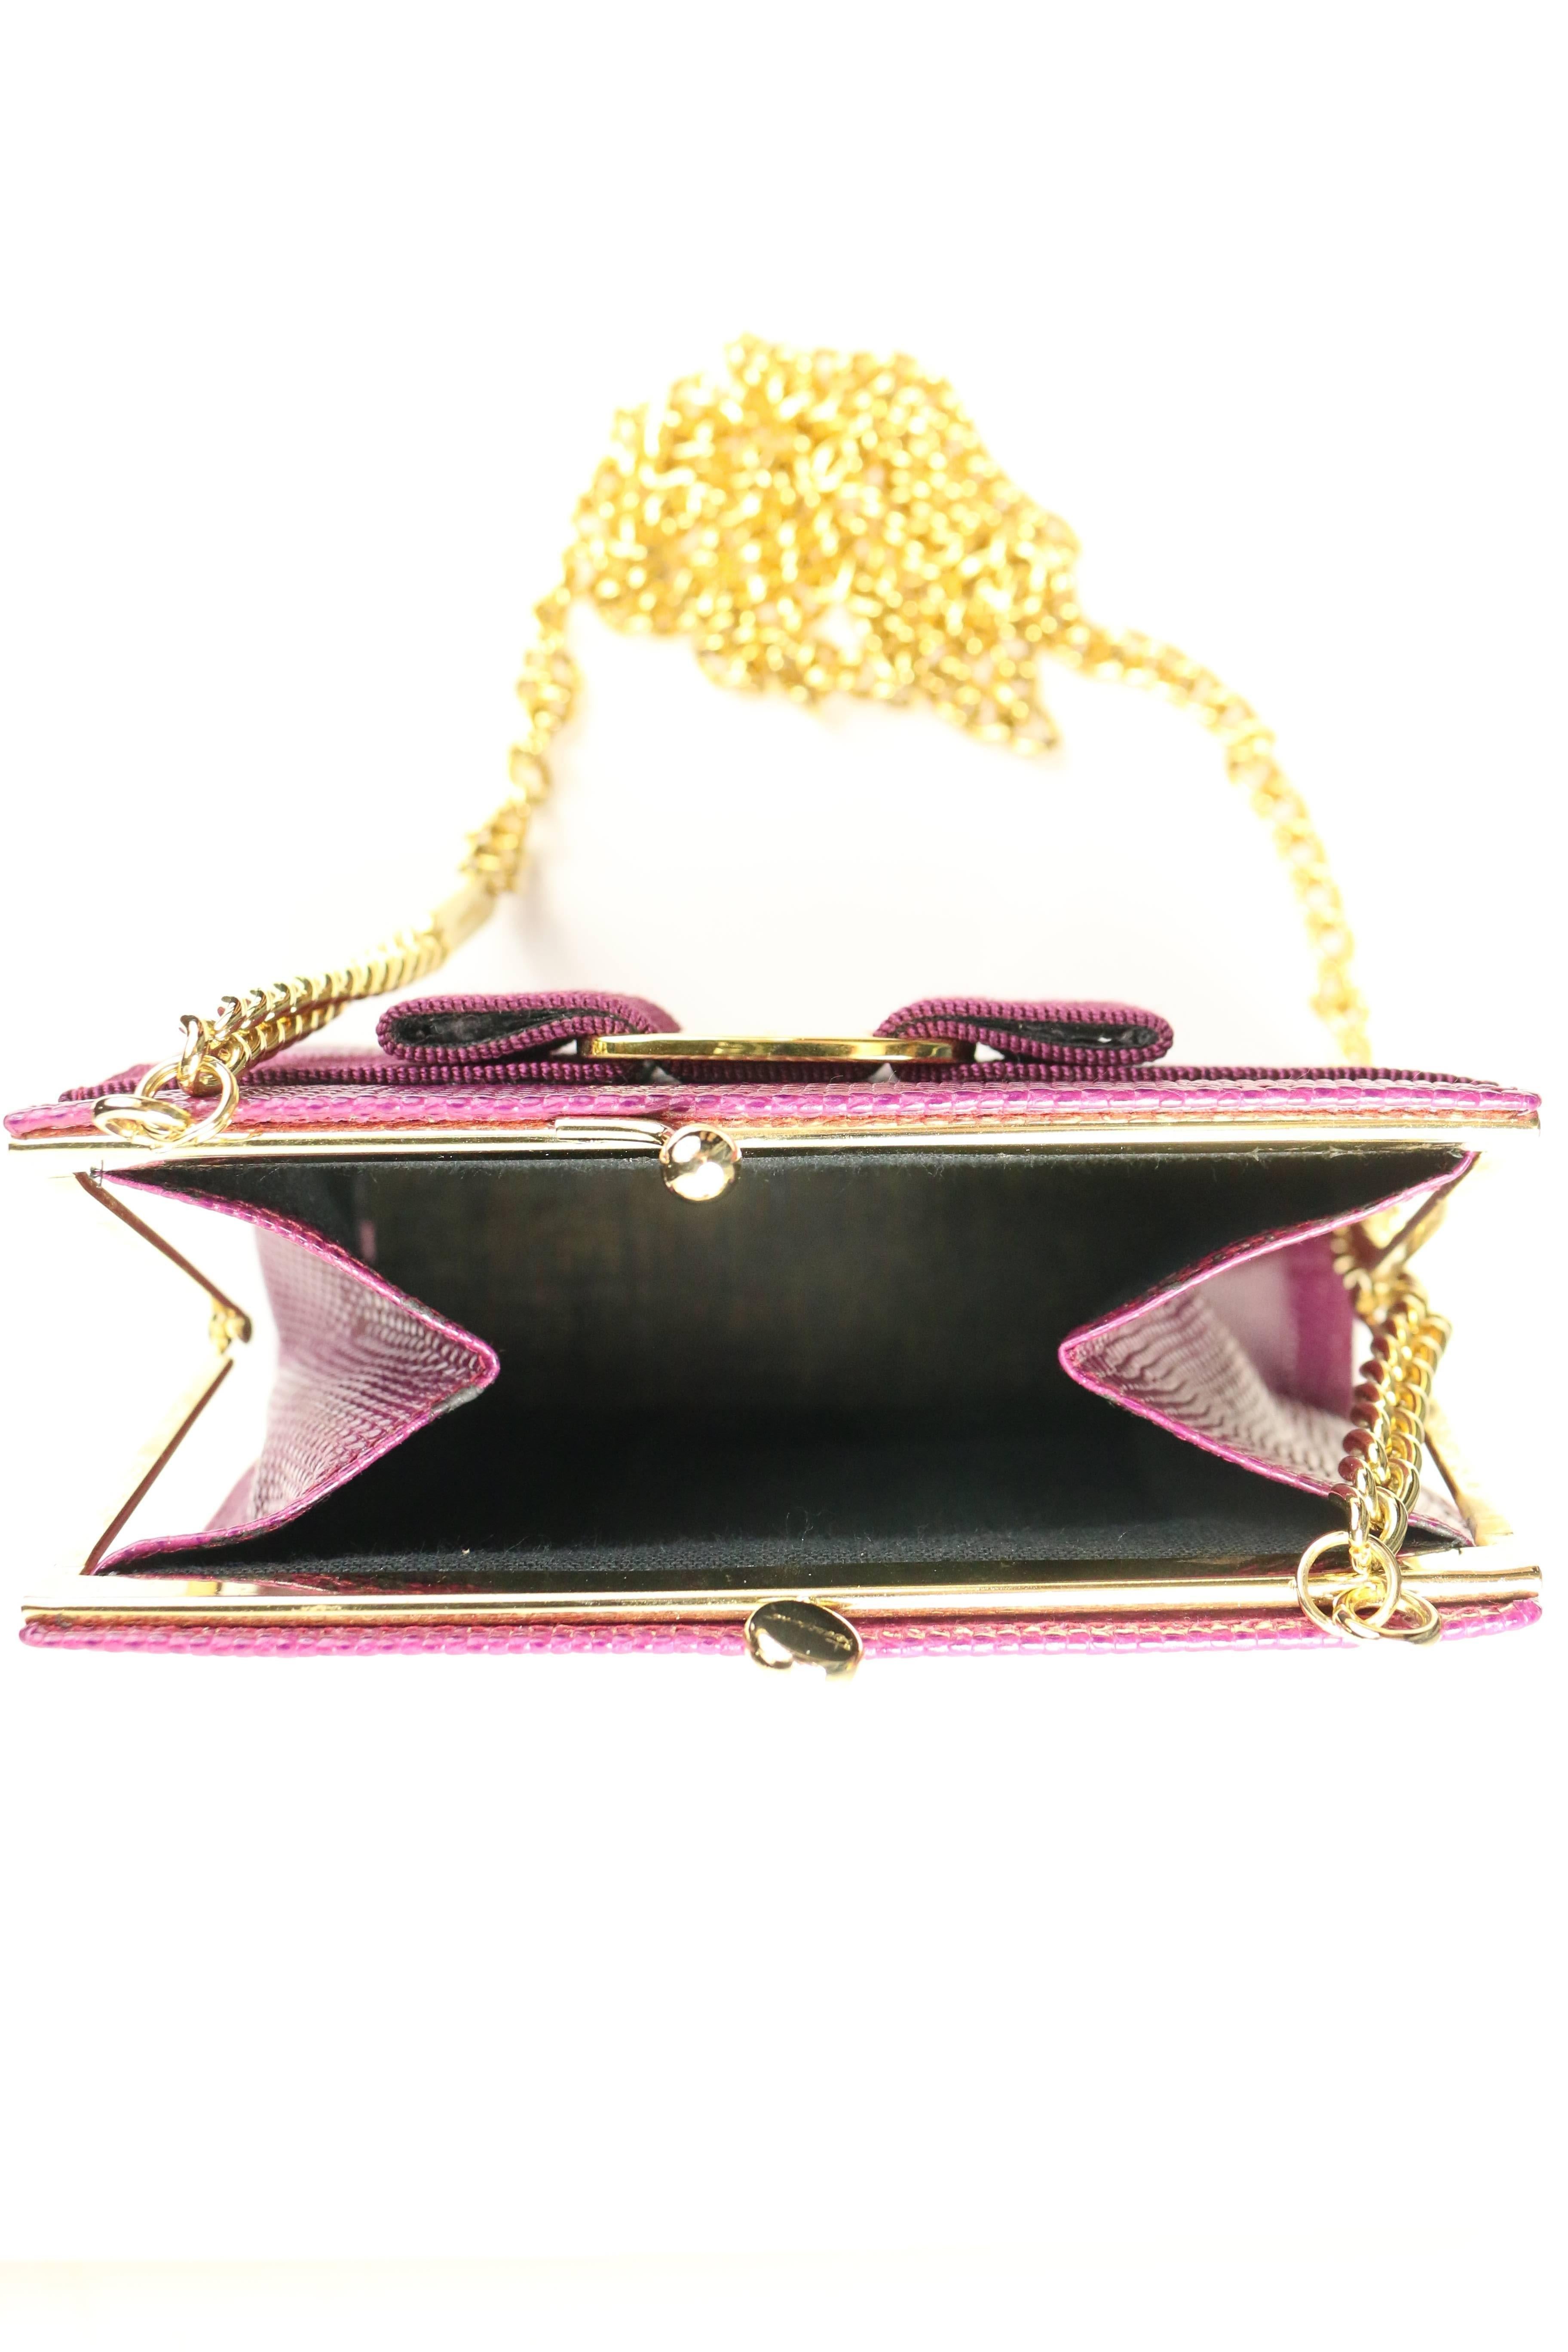 Women's Salvatore Ferragamo Purple Lizard Skin Gold Chain Shoulder Bag